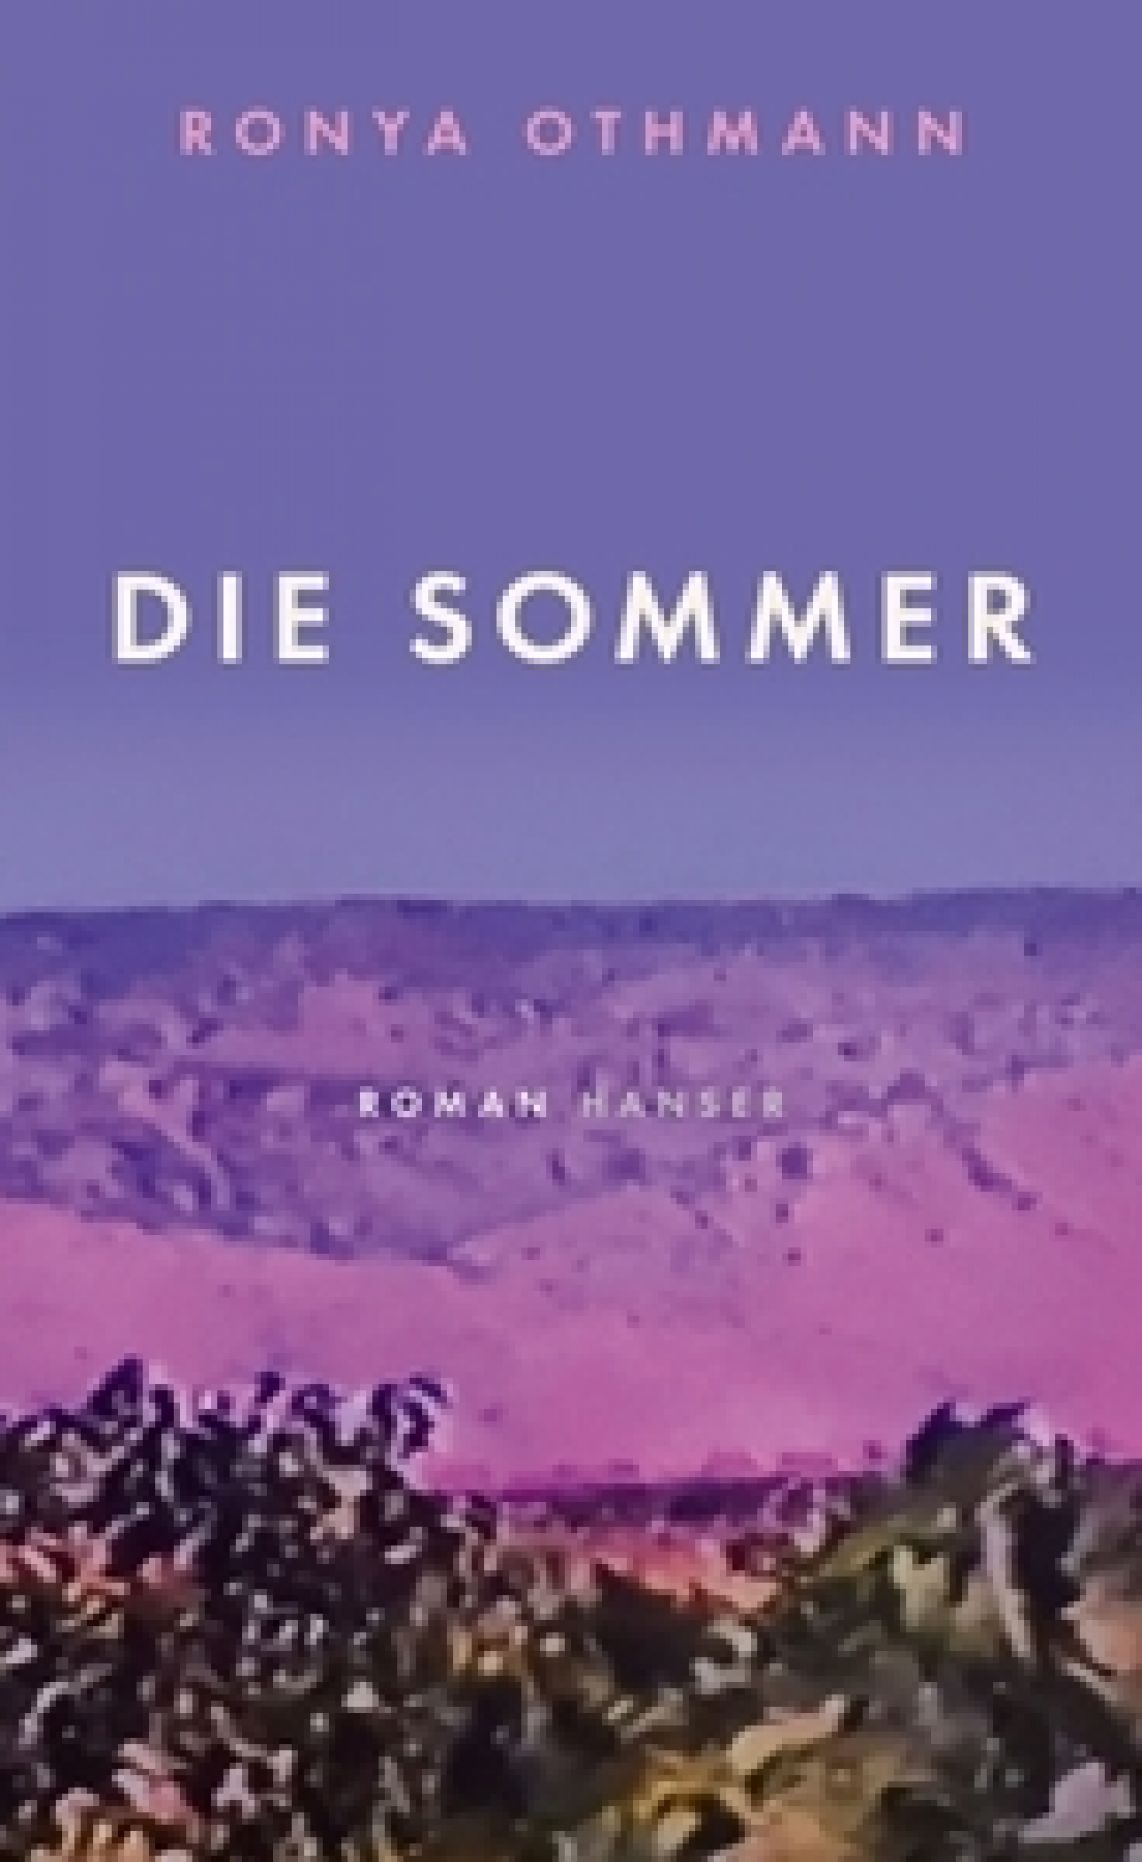 Othmann, Ronya "Die Sommer"